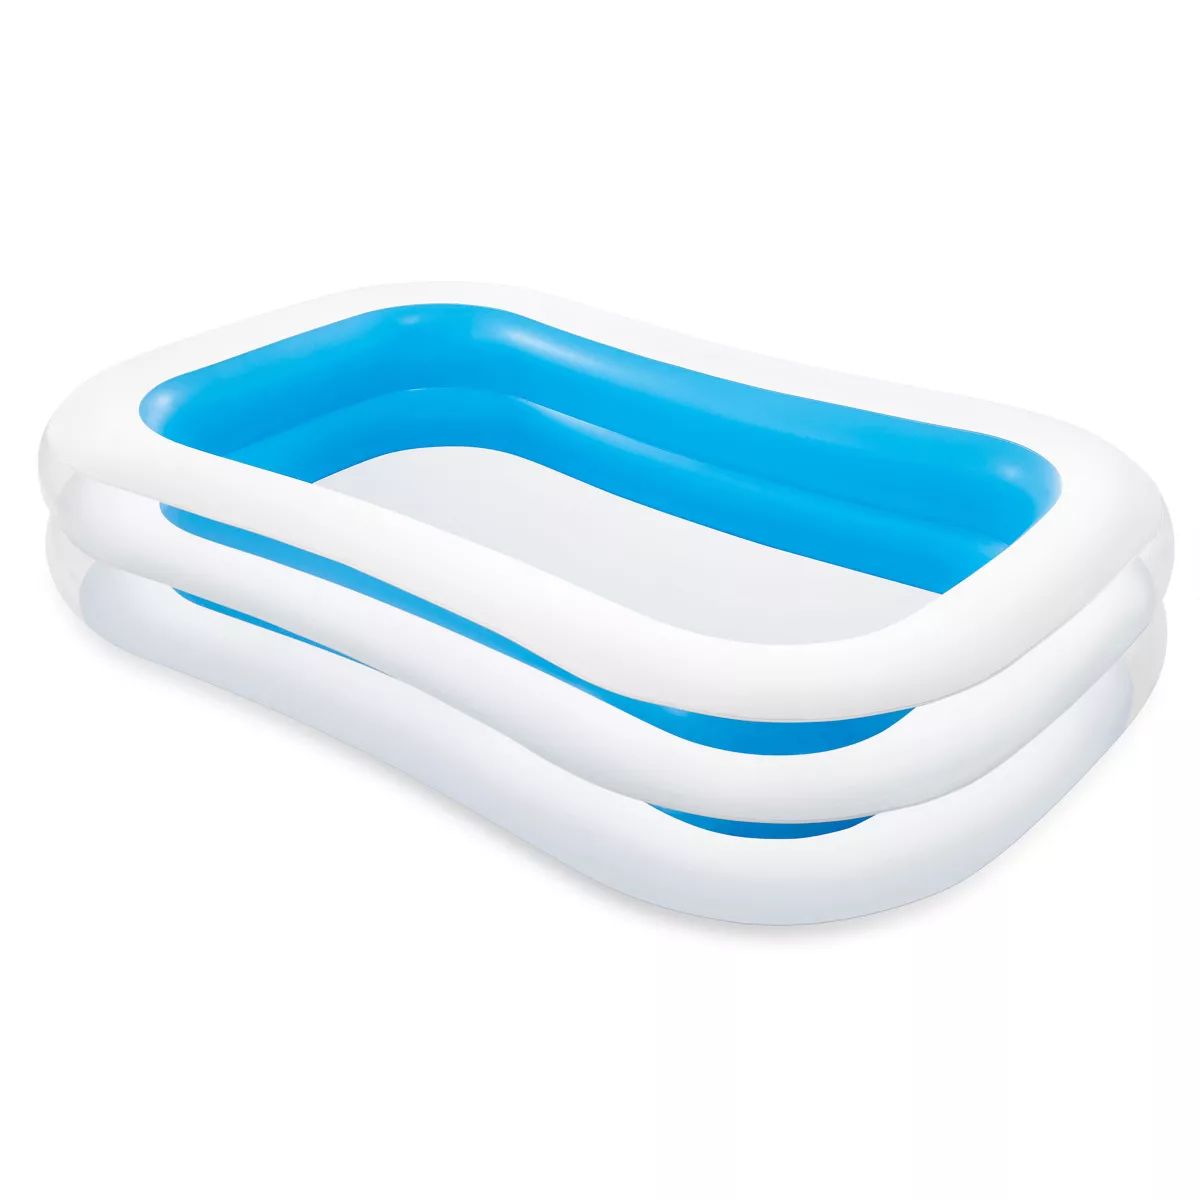 Intex Inflatable 8.5' x 5.75' Swim Center Family Pool for 2-3 Kids, Blue & White | Target